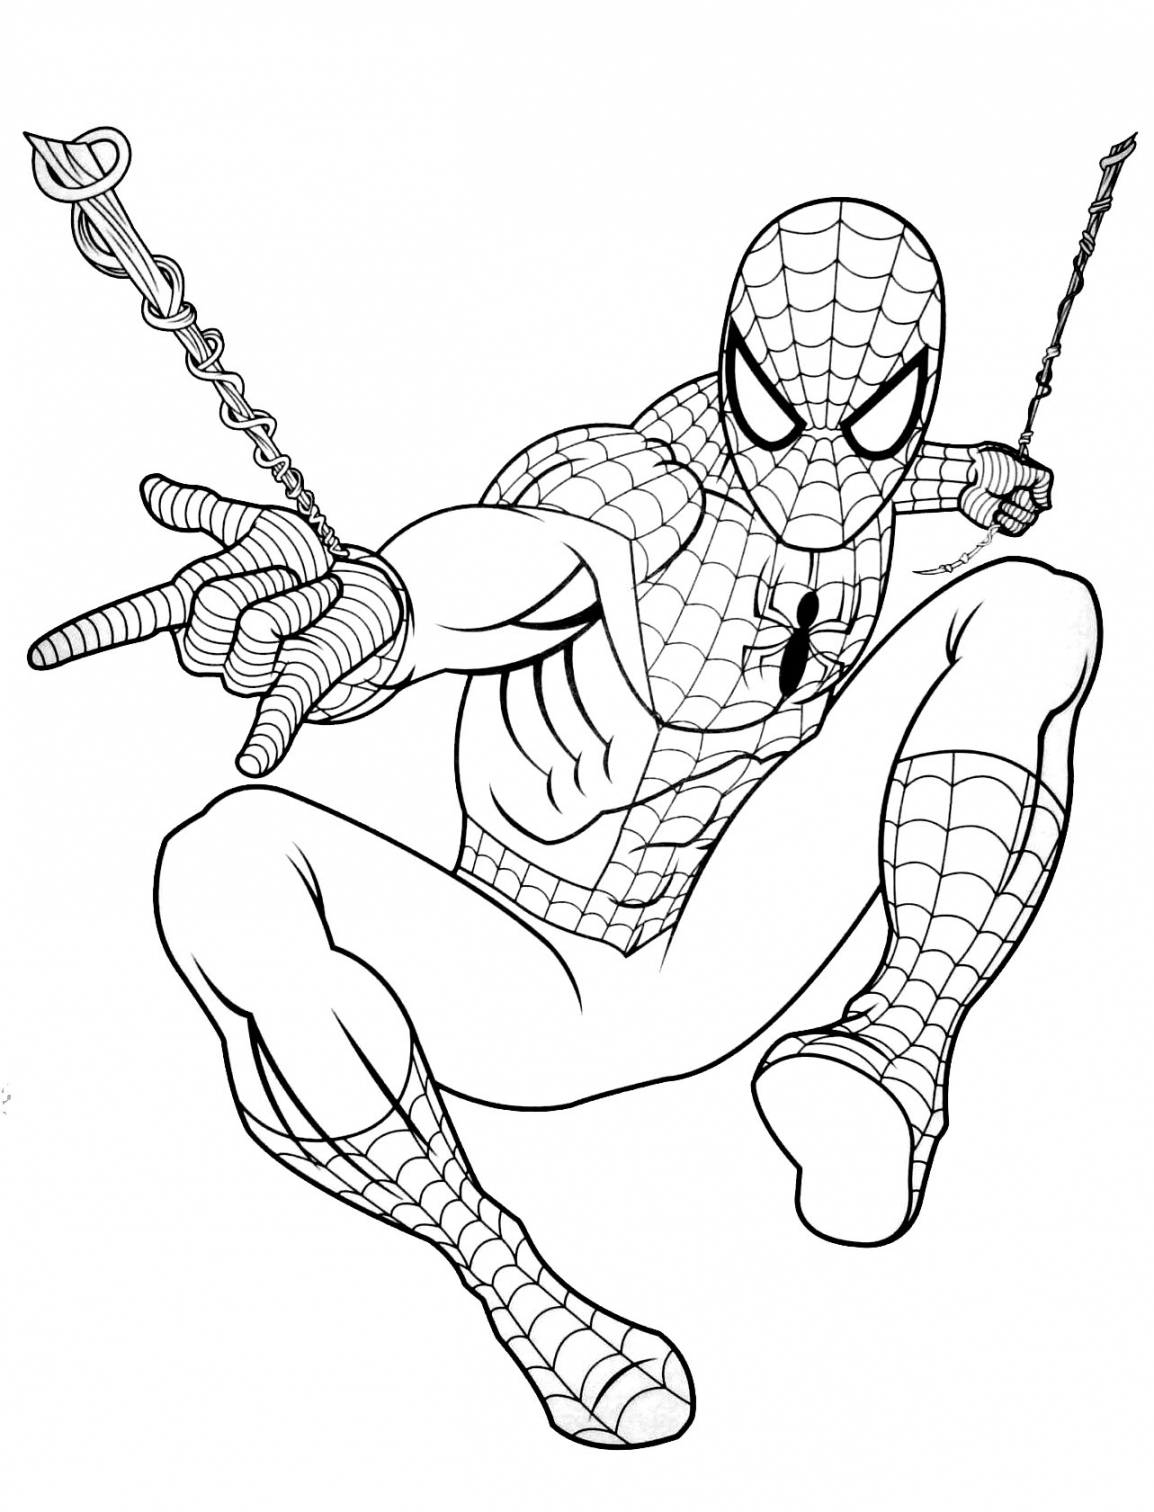 Spiderman Free Printable Coloring Pages - Printable - Free Spiderman drawing to print and color - Spiderman Kids